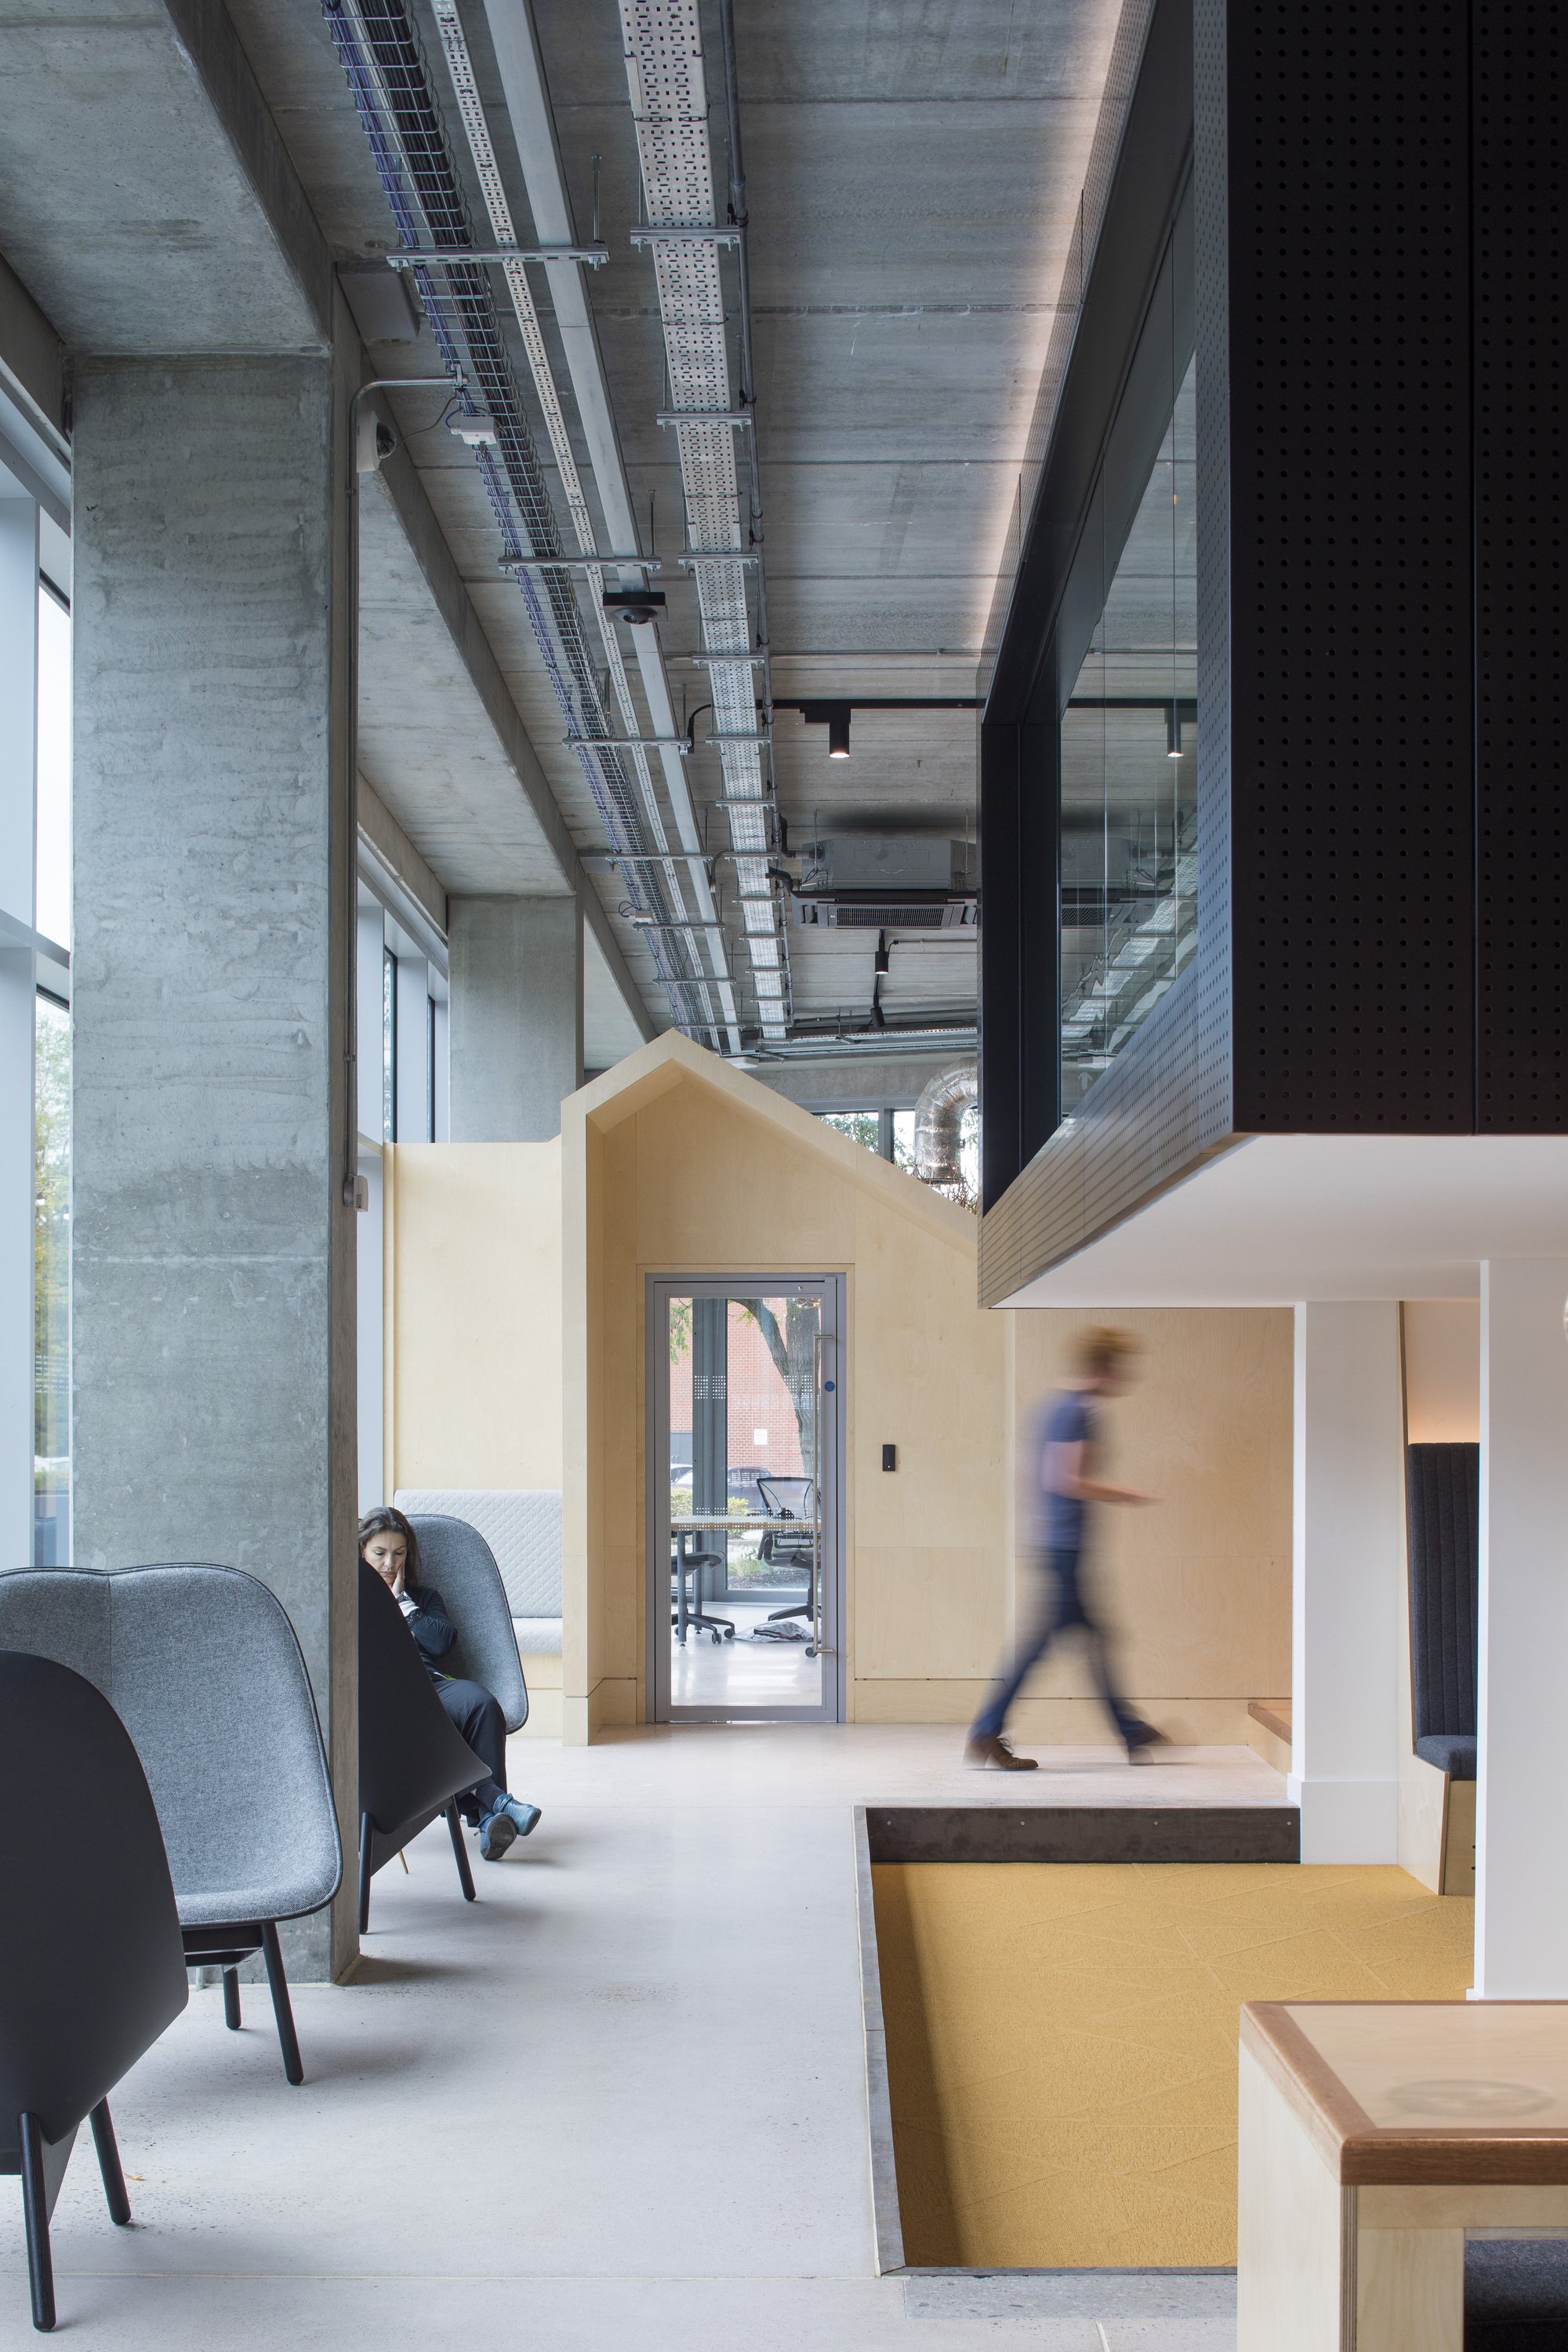 CityVerve 公司英国总部，24小时照亮曼彻斯特大学 / BDP|ART-Arrakis | 建筑室内设计的创新与灵感